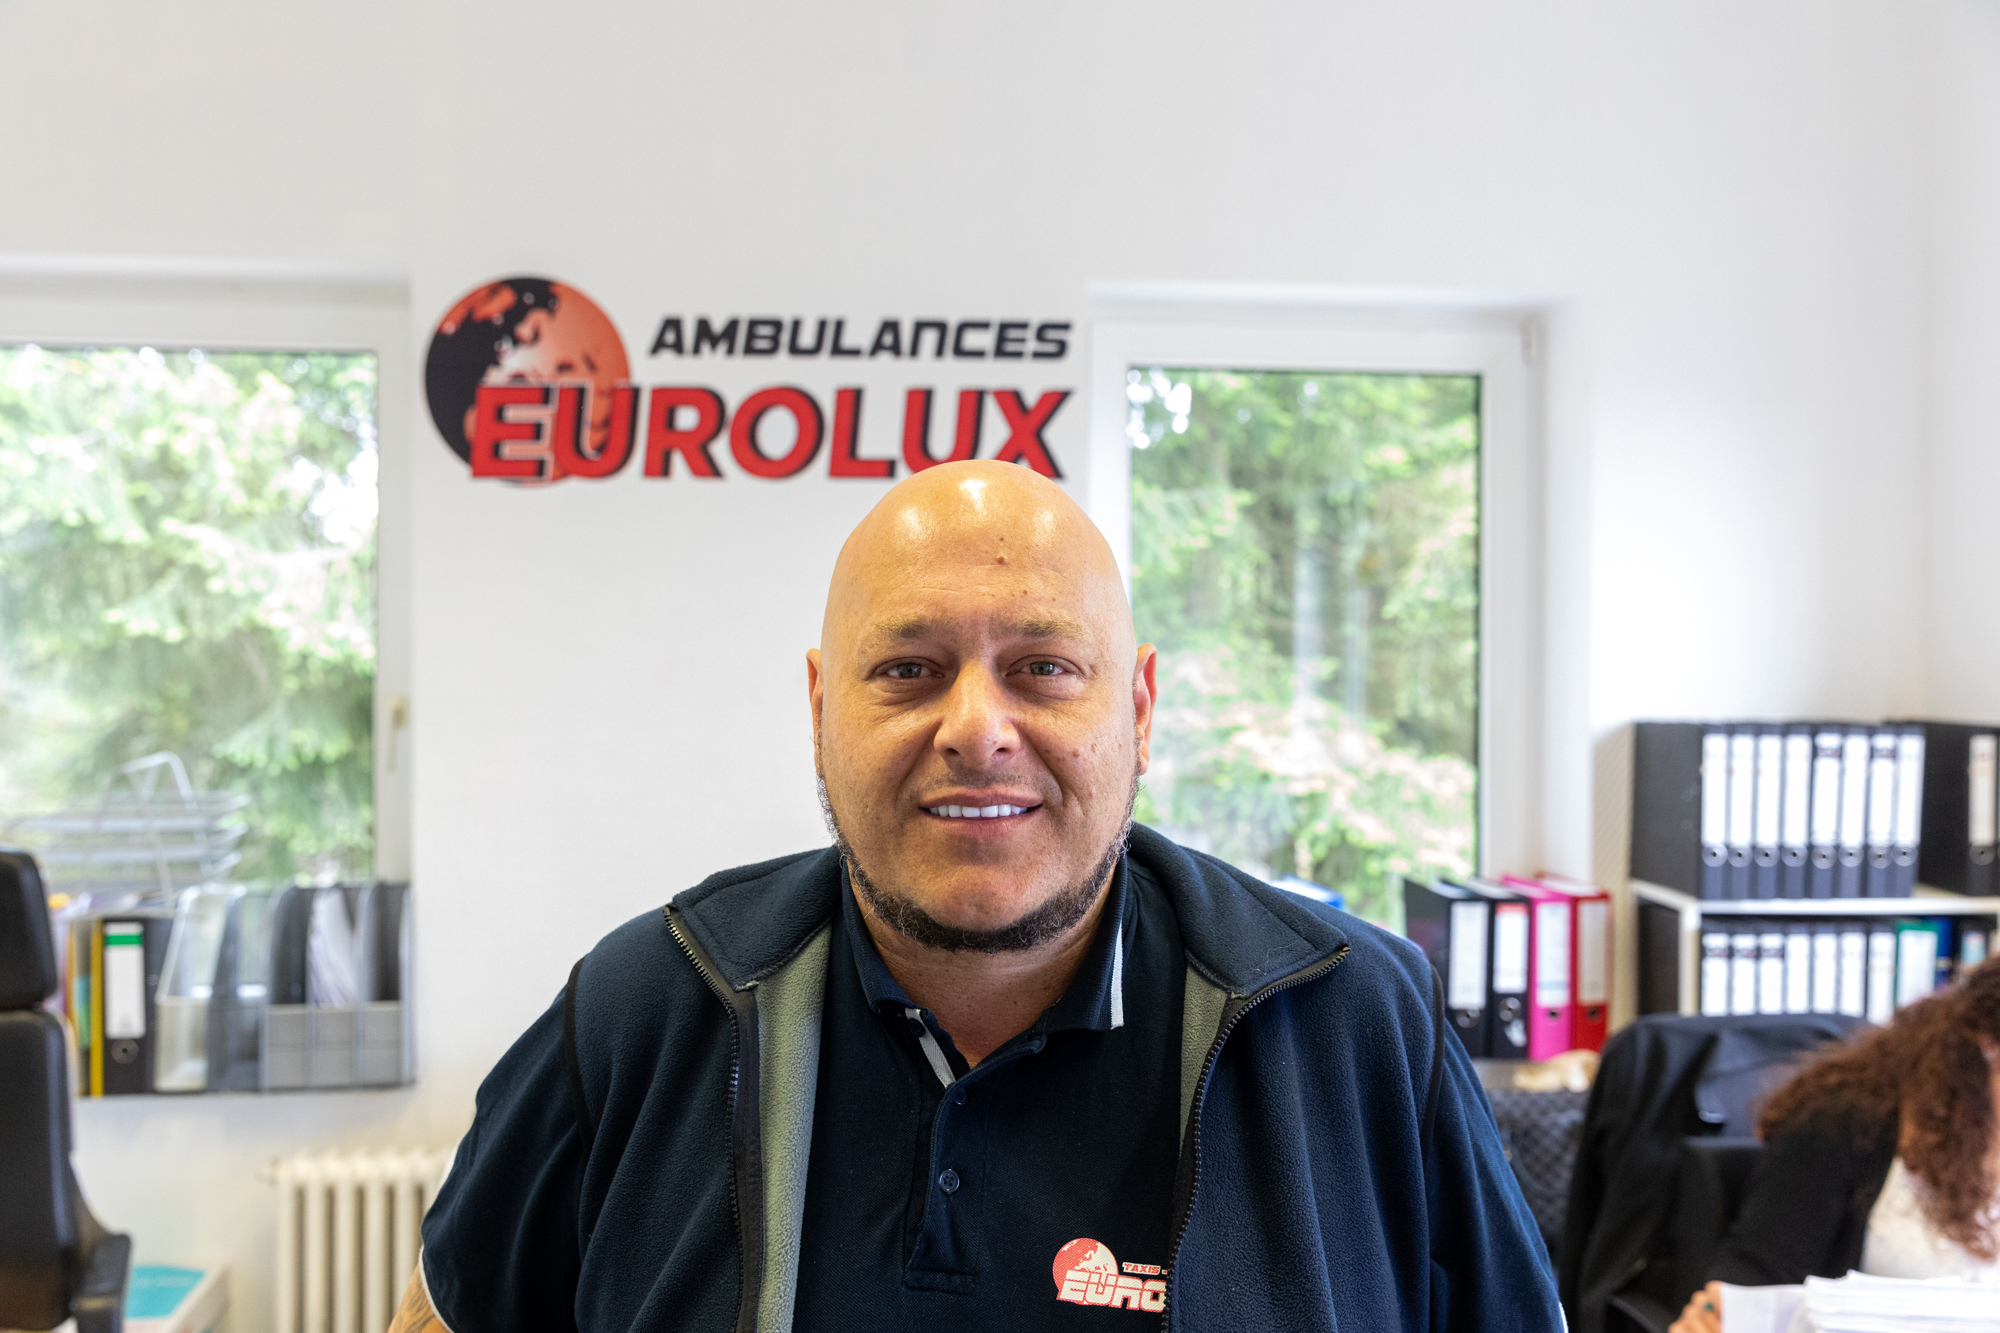 Taxis Ambulance Eurolux – E wichtege Service